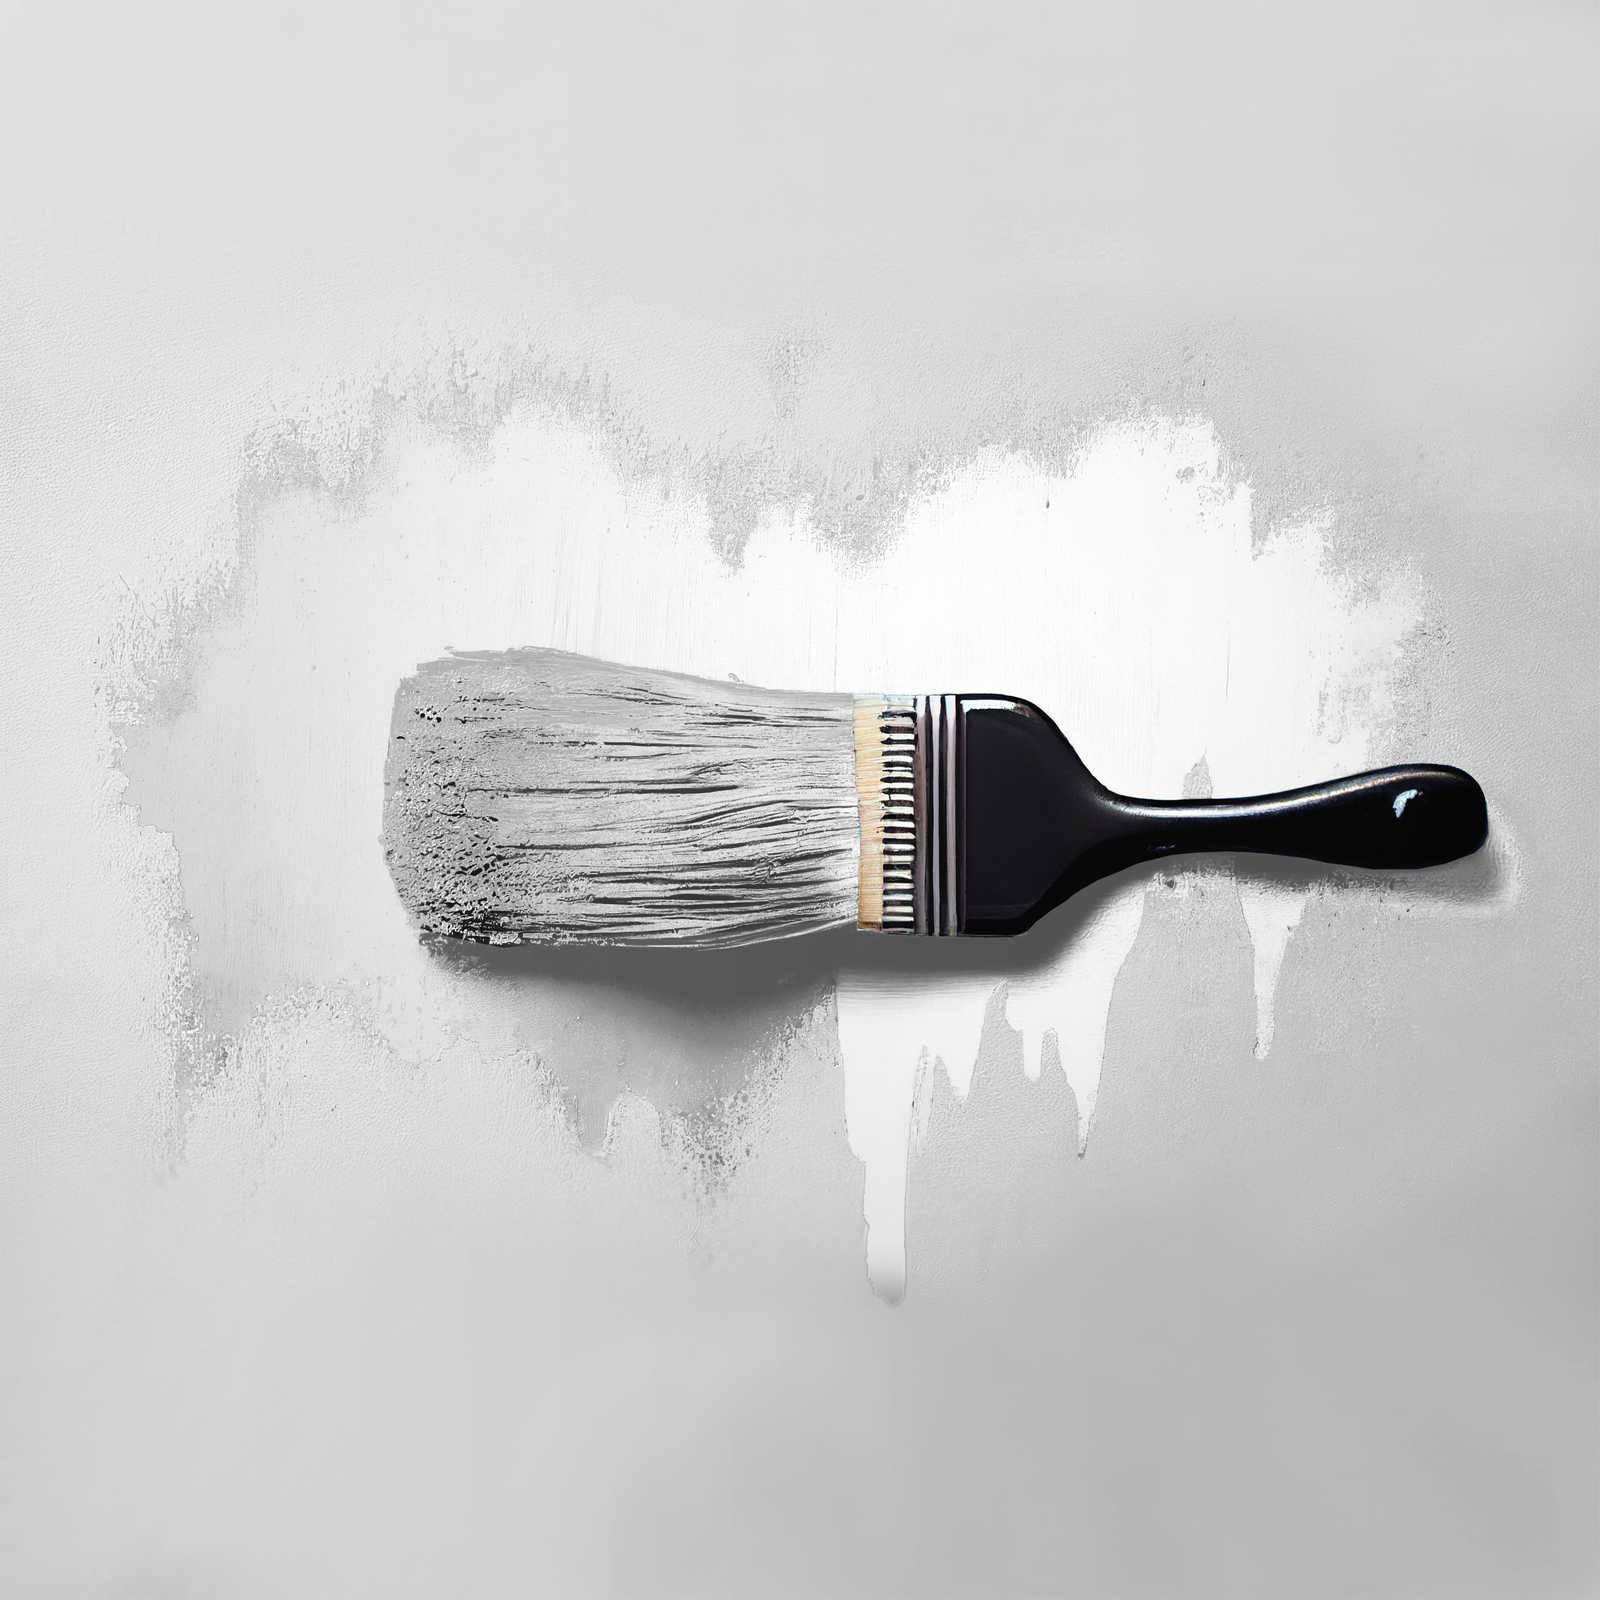             Peinture murale TCK1000 »Melting Marshmellow« en blanc neutre – 2,5 litres
        